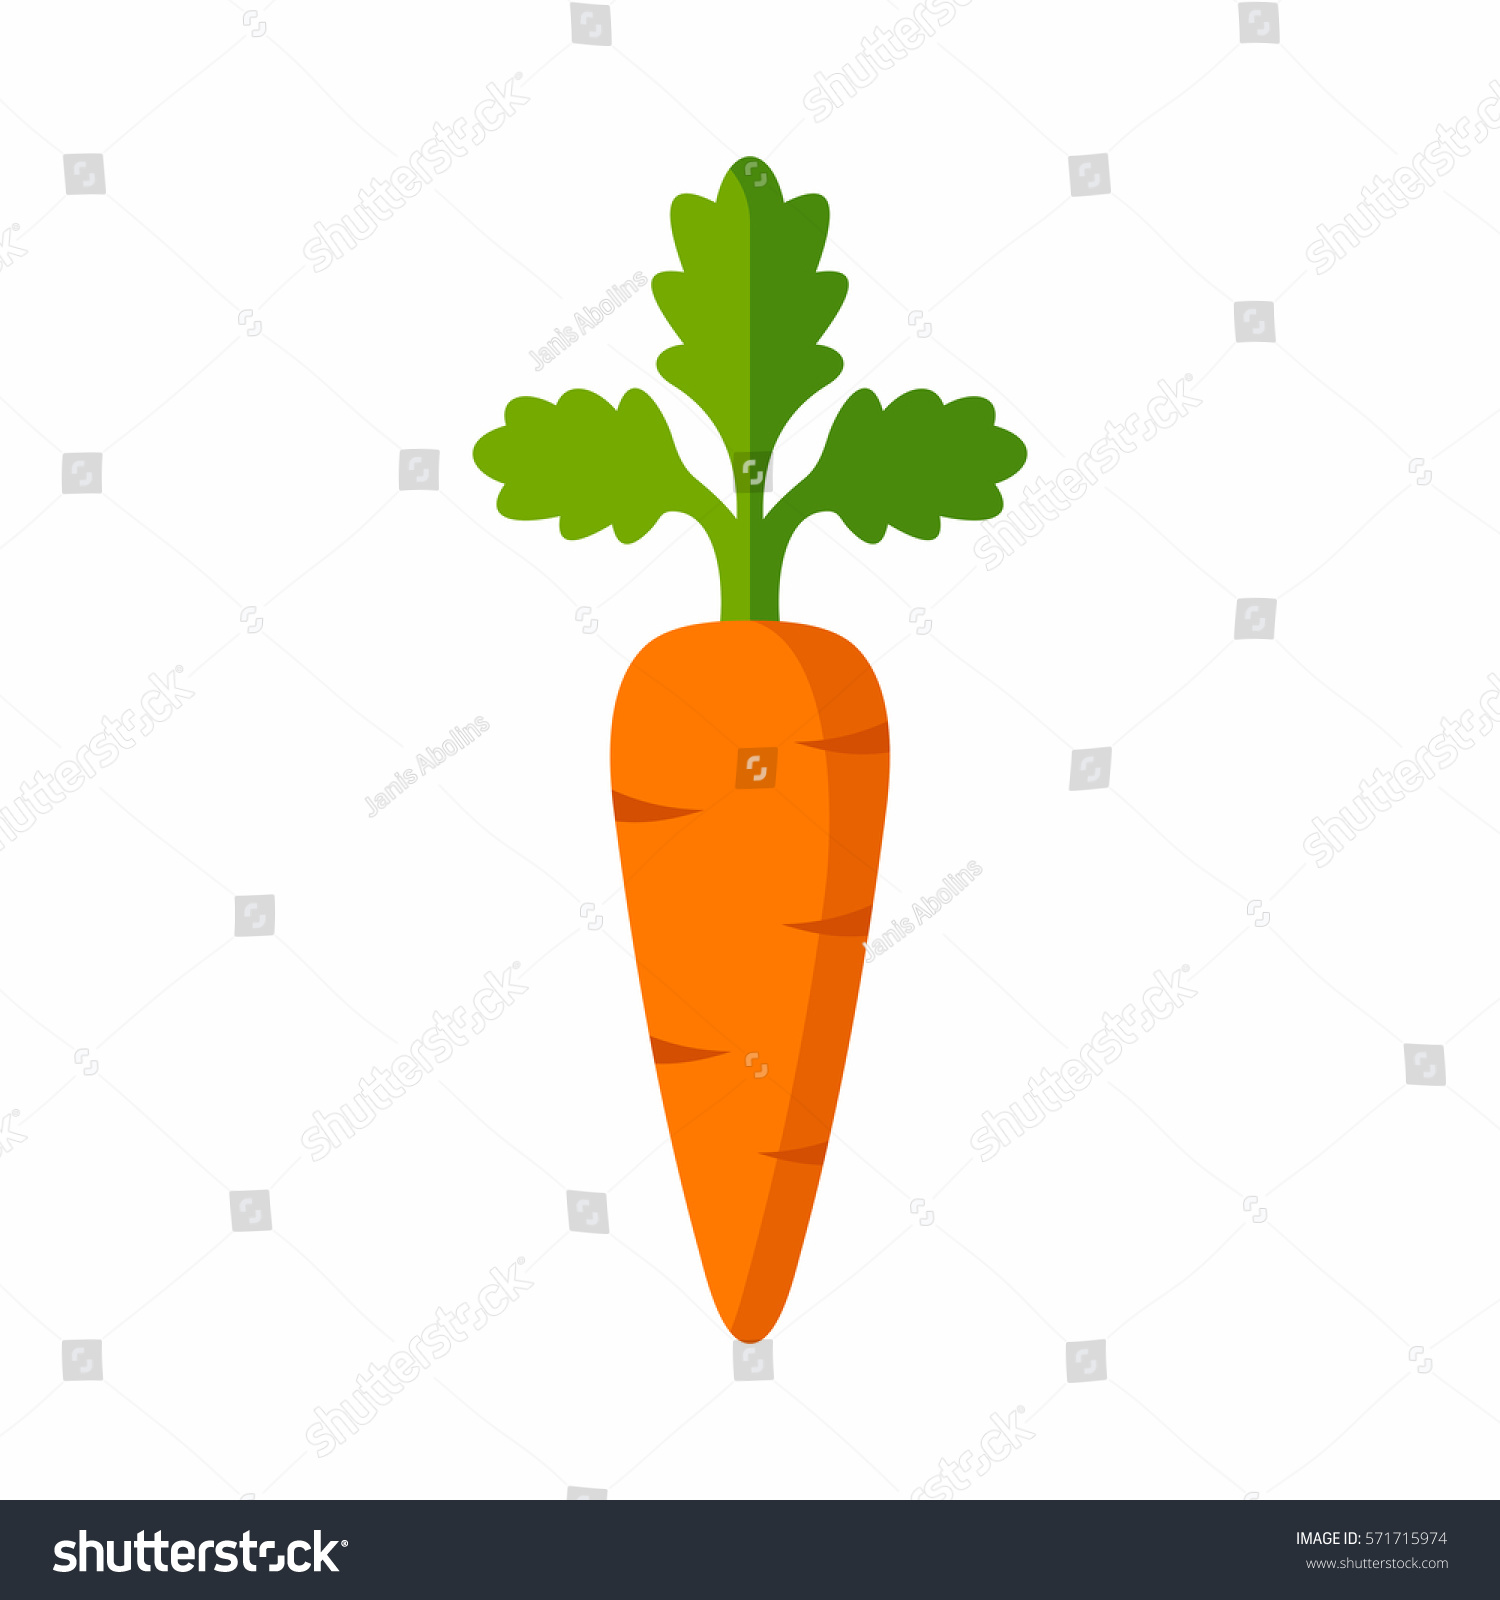 Carrot icon #571715974